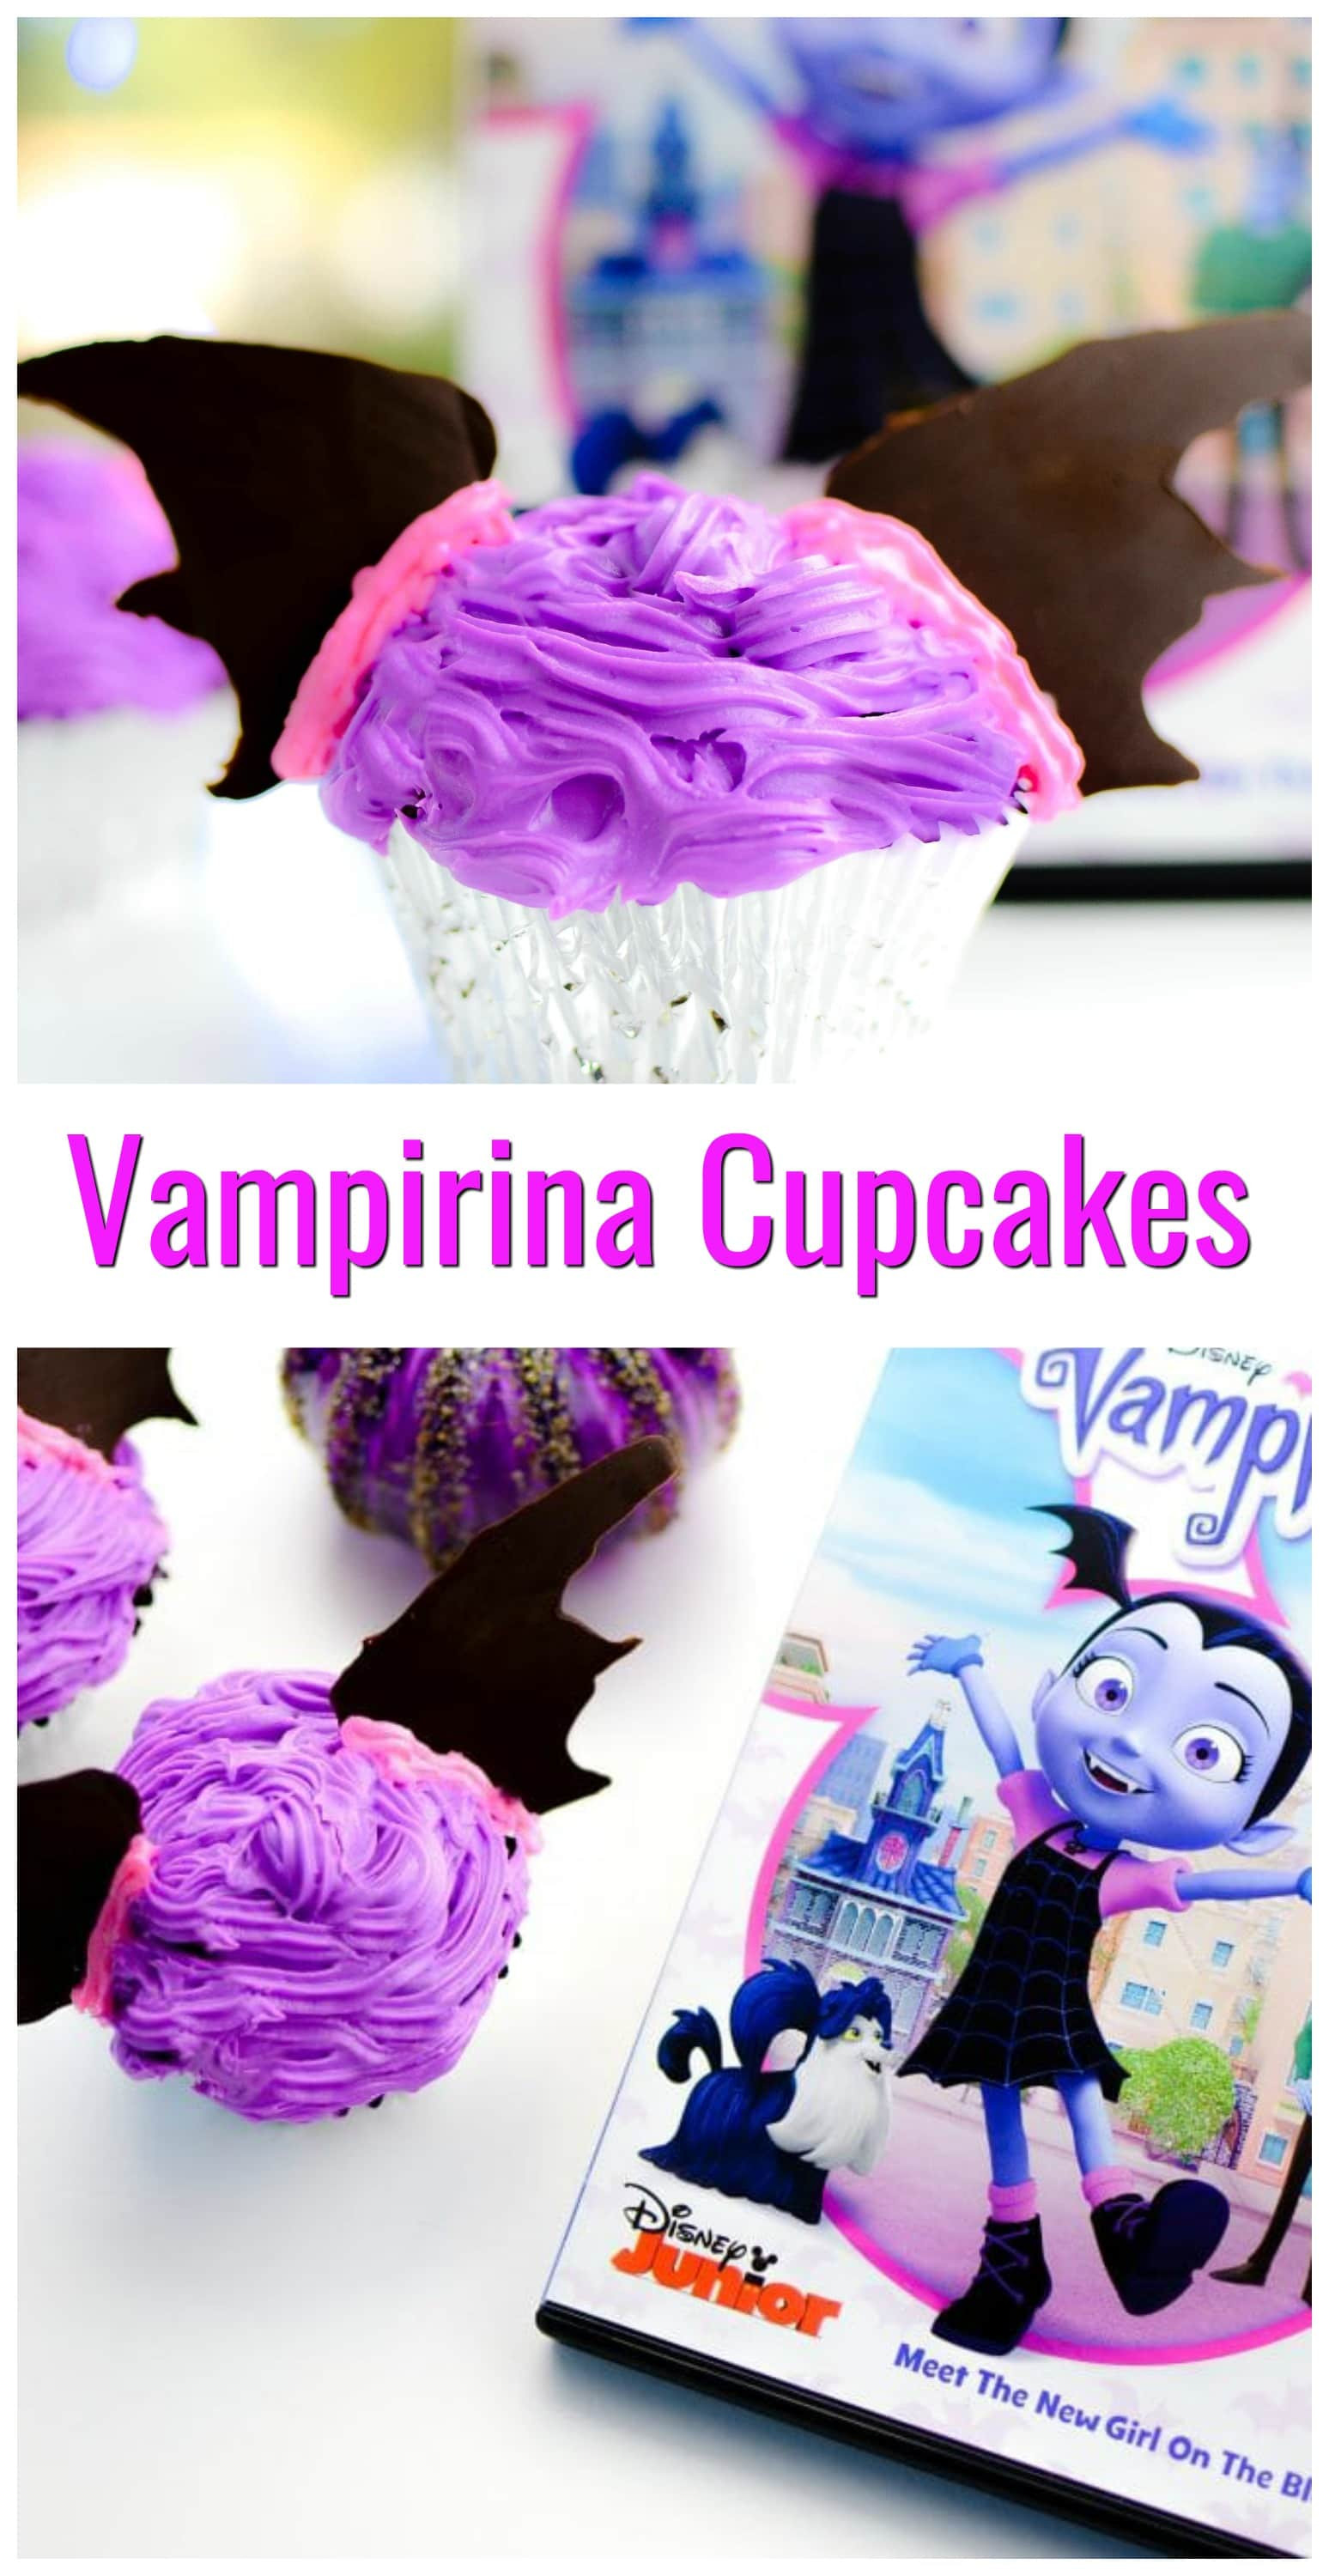 Best ideas about Vampirina Birthday Decorations
. Save or Pin Vampirina Cupcakes Vampirina Birthday Party Ideas Now.